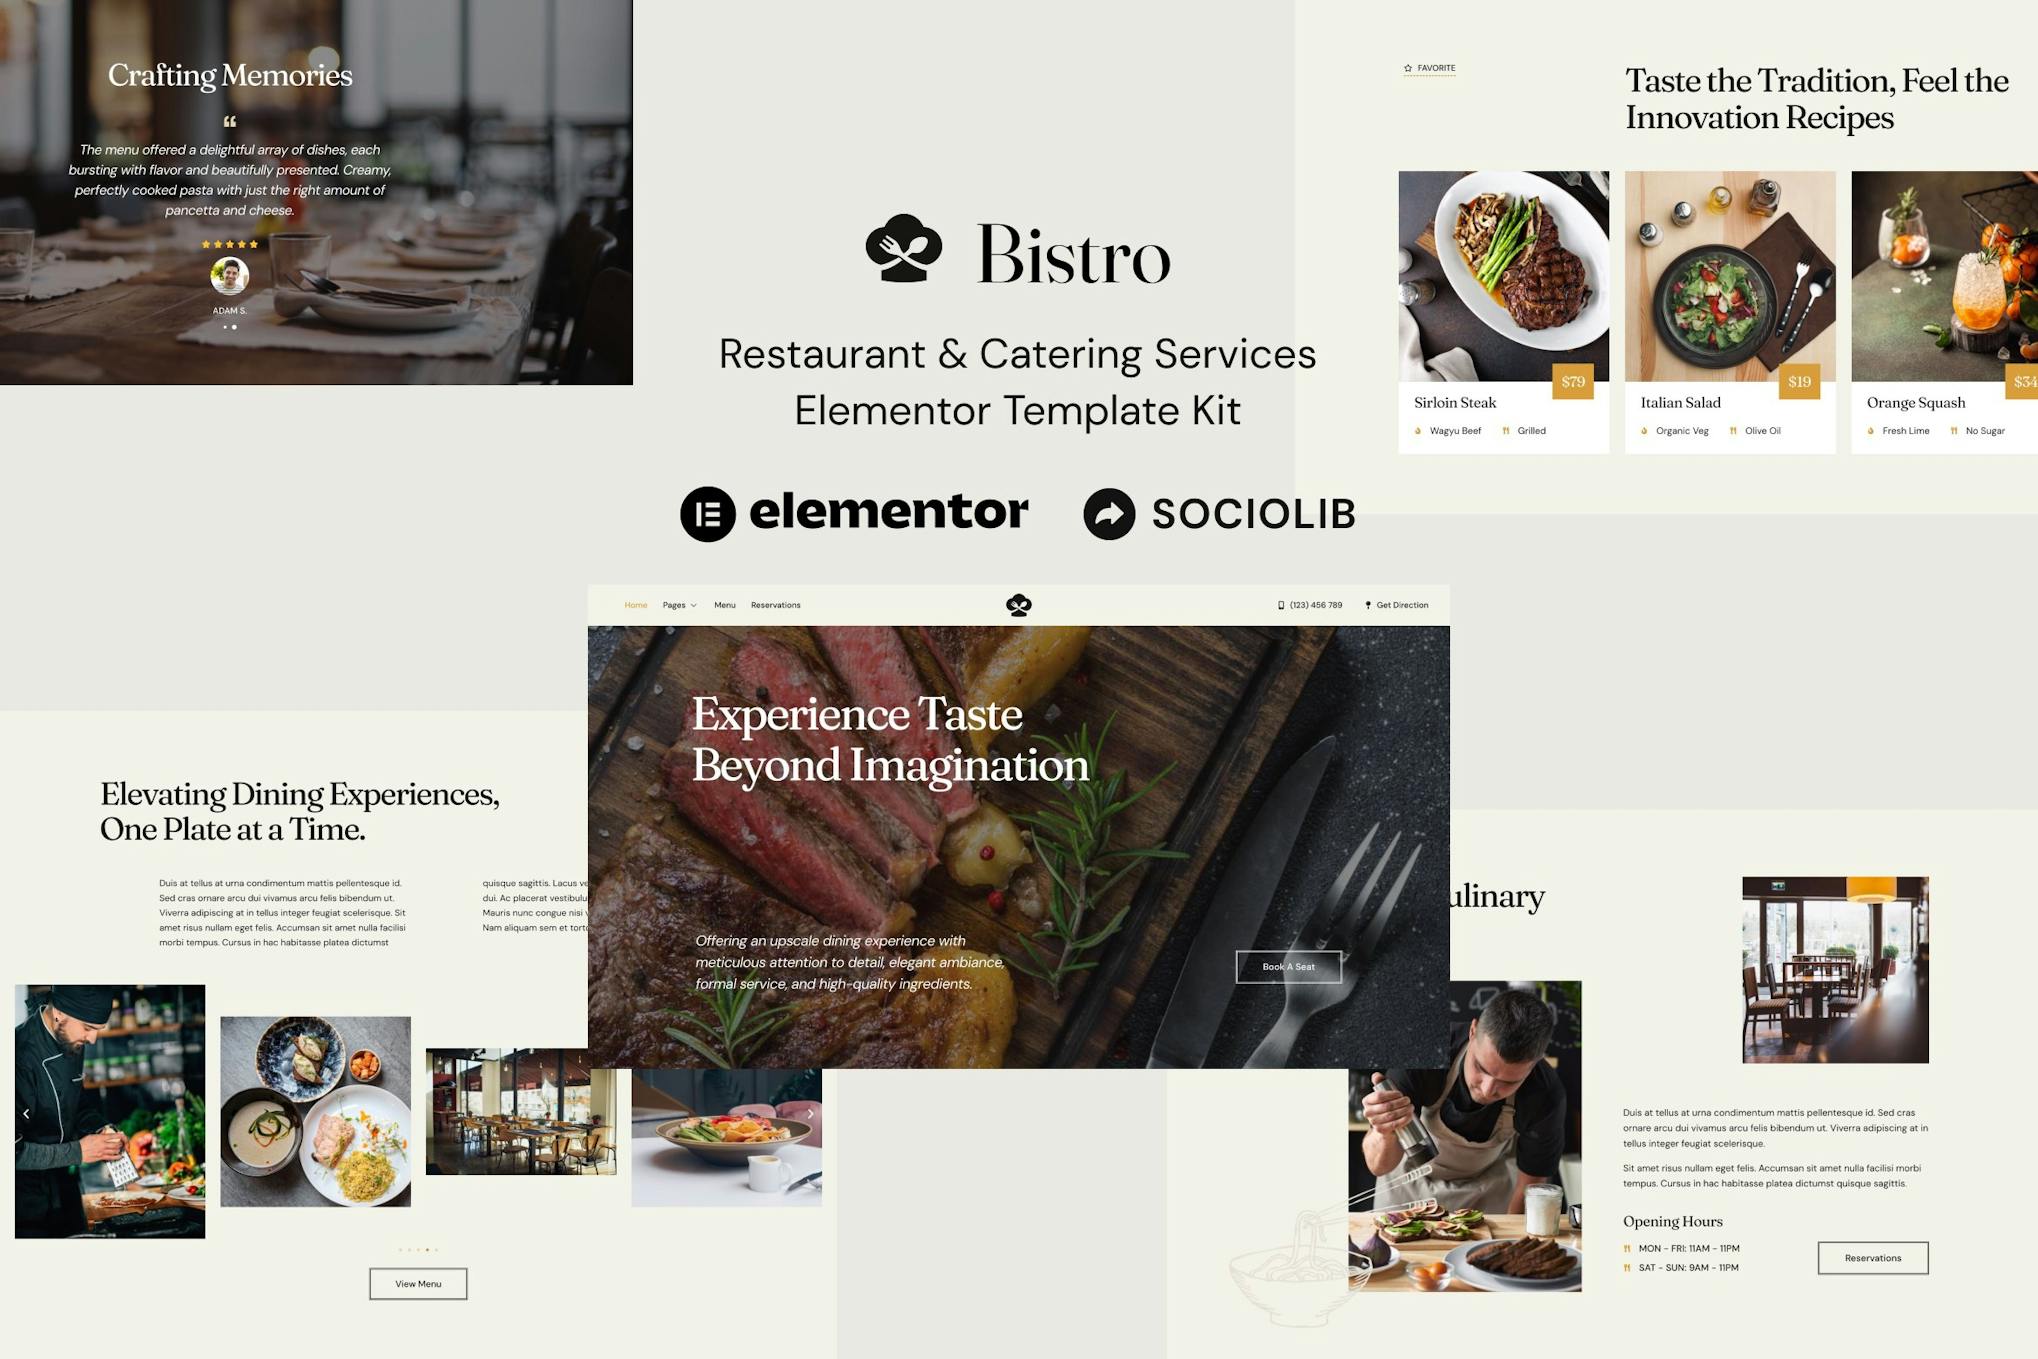 Download Bistro - Restaurant & Catering Services Elementor Template Kit